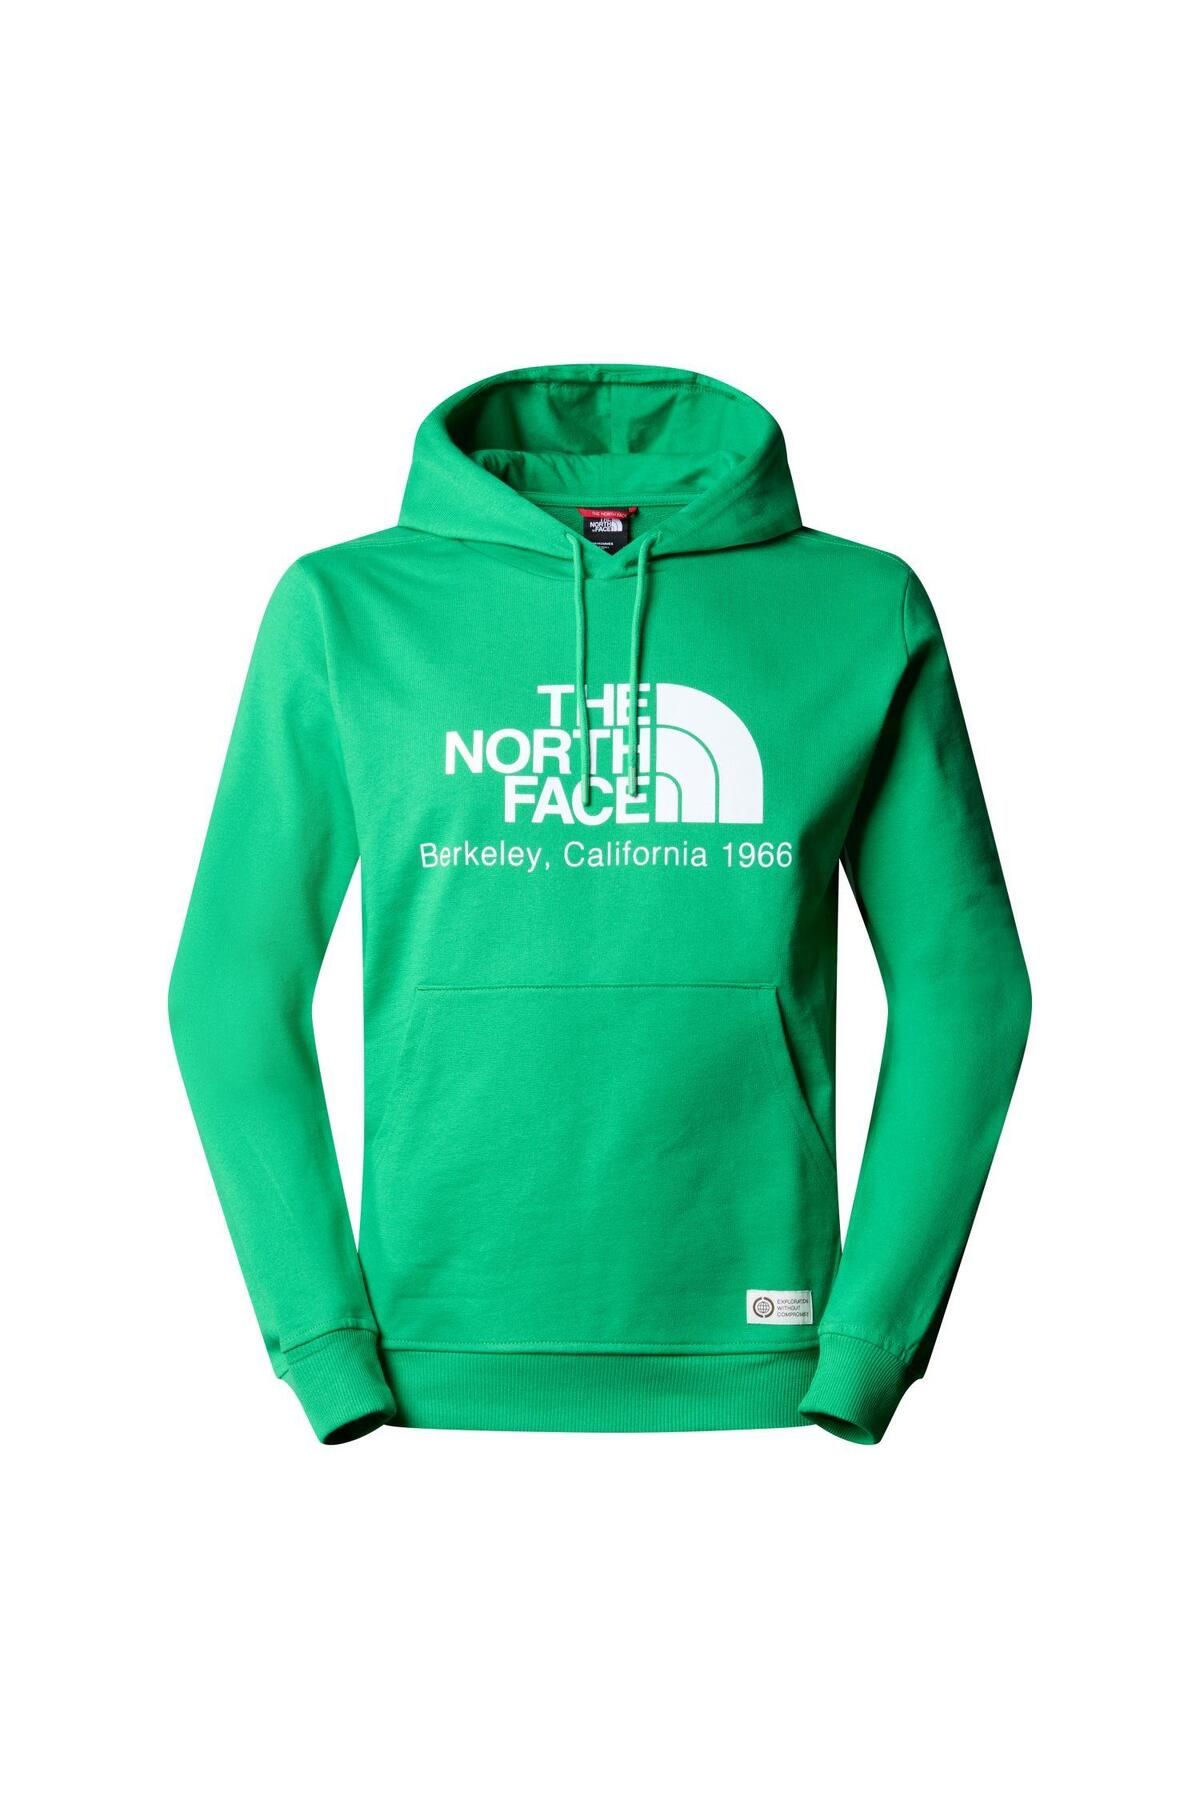 The North Face M BERKELEY CALIFORNIA HOODIE Erkek Sweat Shirt NF0A55GFPO81 Yeşil-L